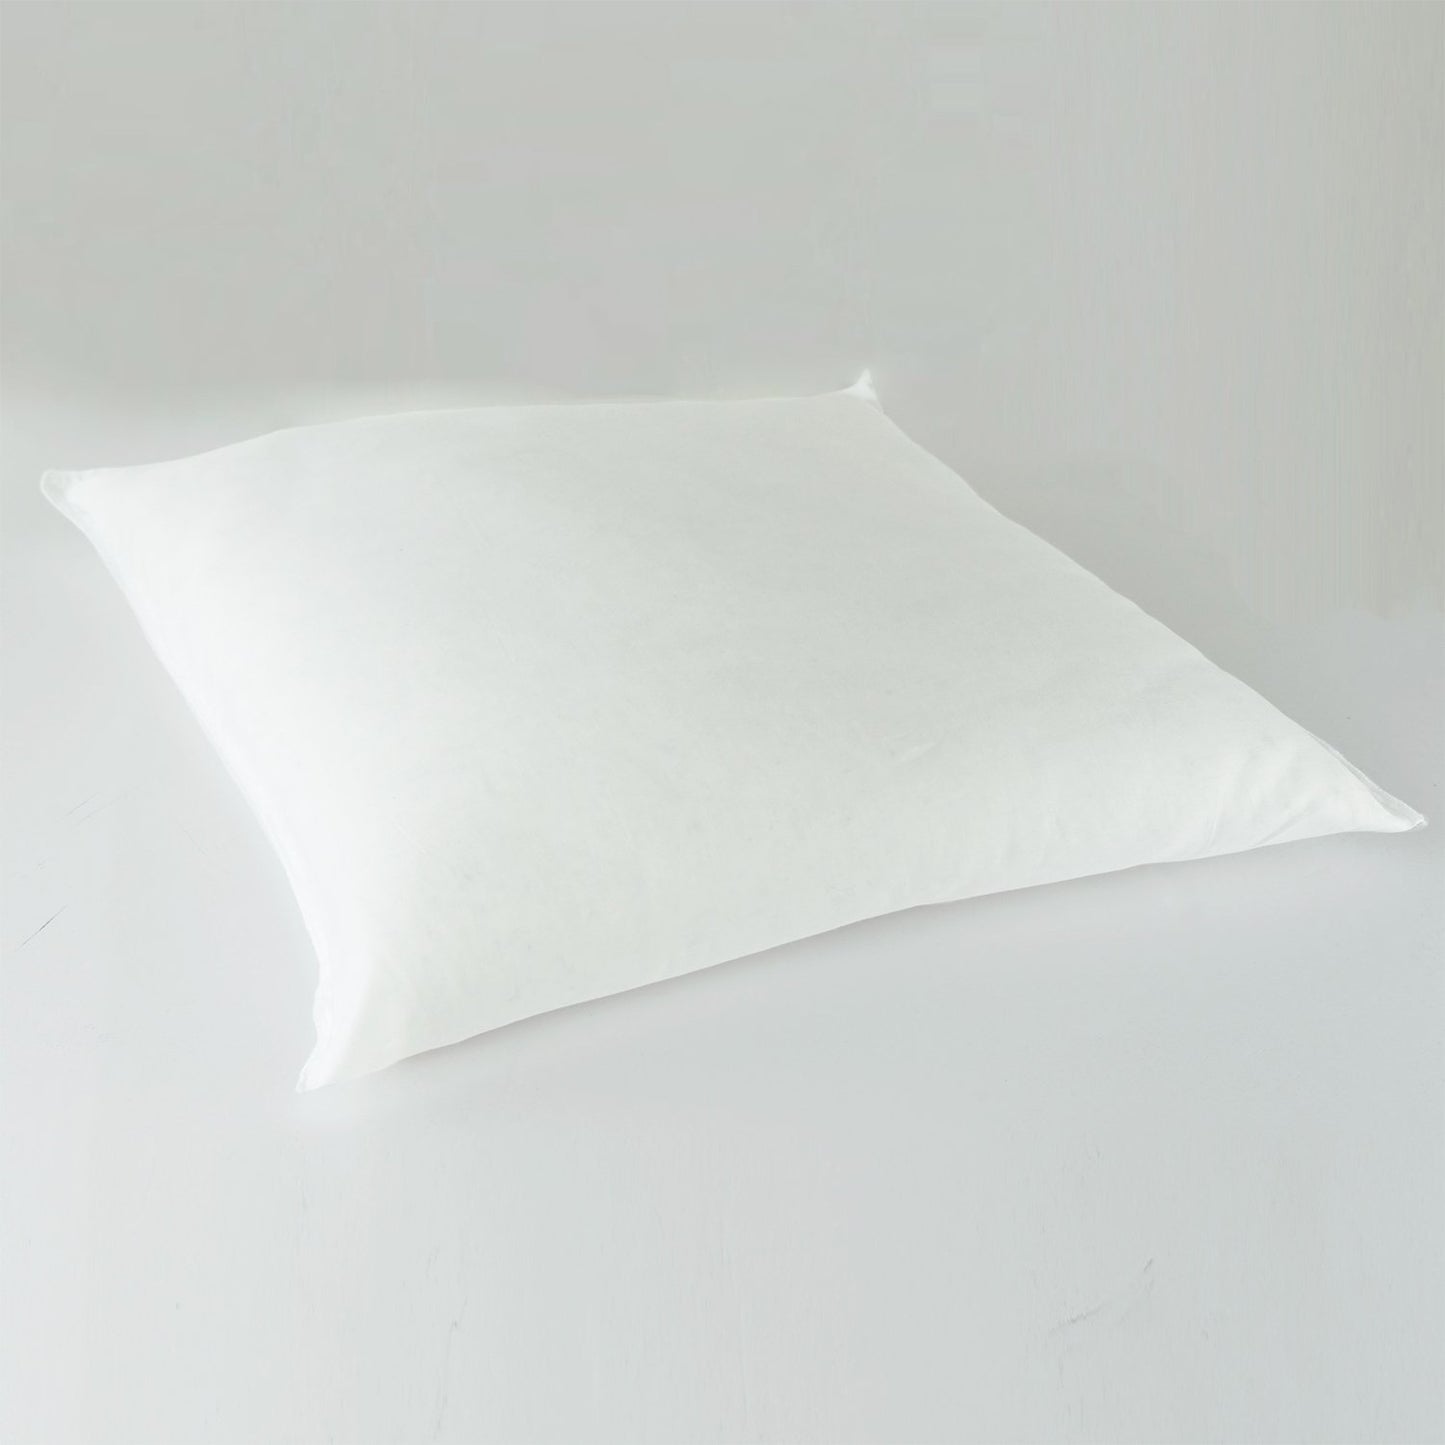 J-Life Cherry Blossom Tan Zabuton Floor Pillow_Pillows & Shams_Zabuton Floor Pillows_100% Cotton_Reversible_Handmade